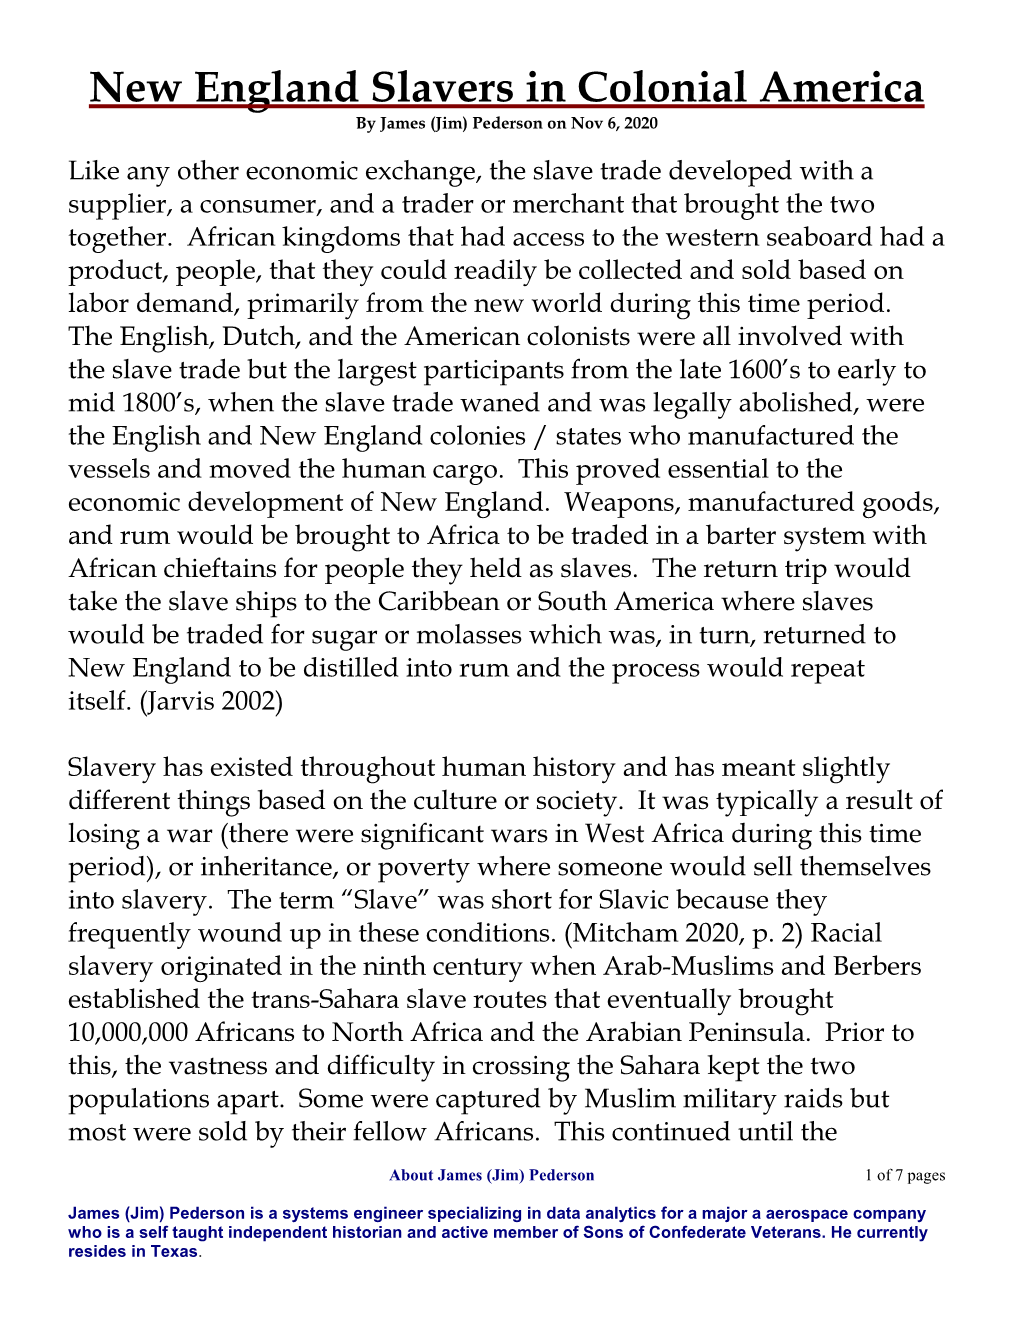 New England Slavers in Colonial America by James (Jim) Pederson on Nov 6, 2020